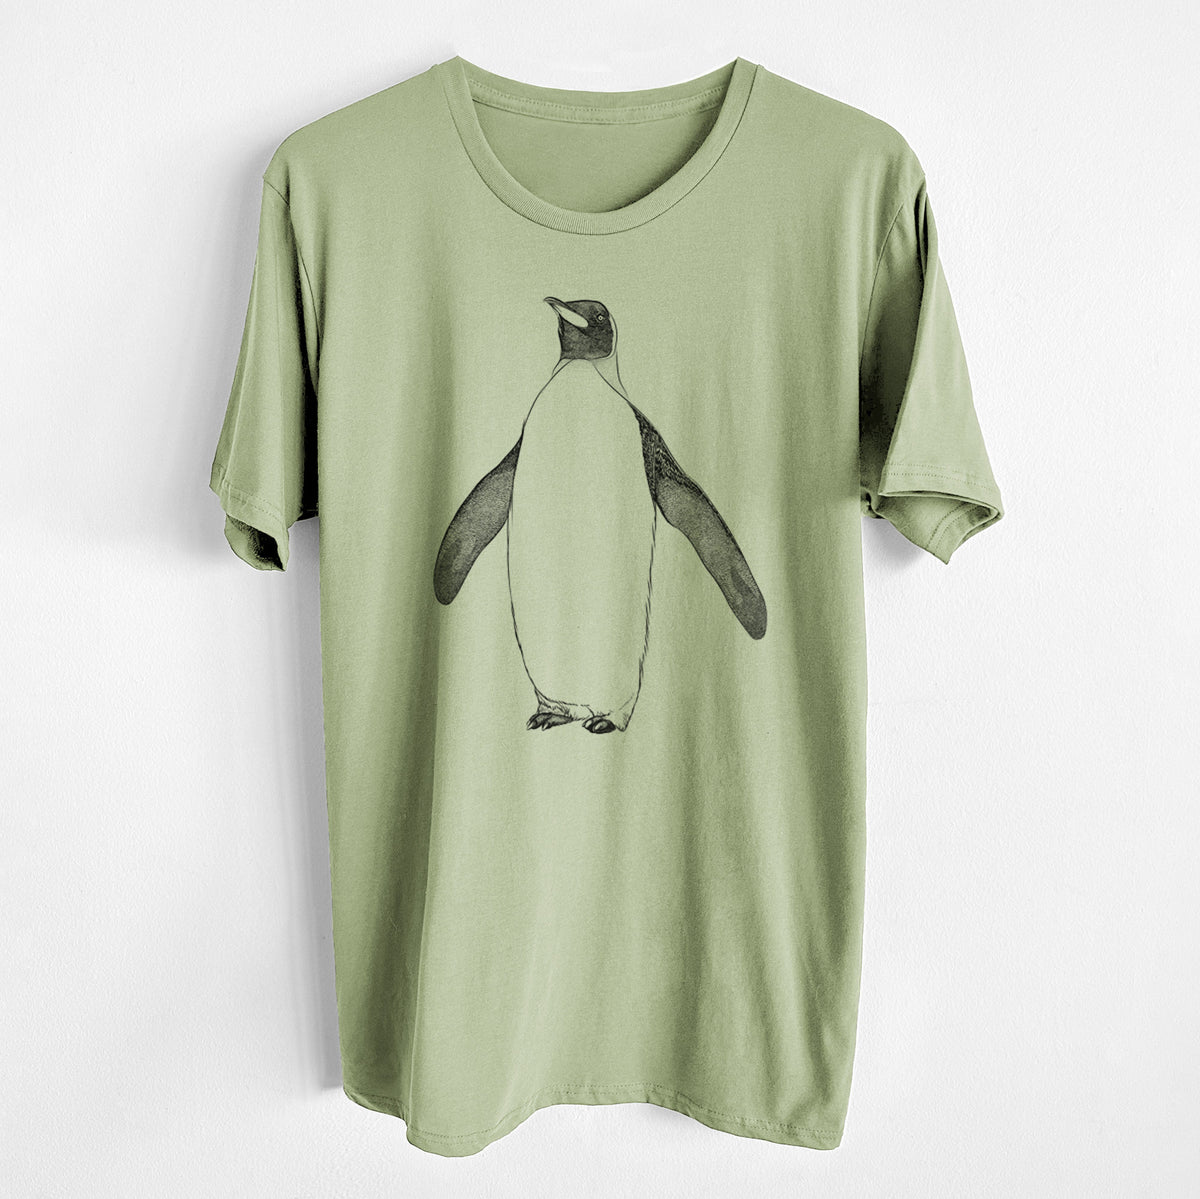 Emperor Penguin - Aptenodytes forsteri - Unisex Crewneck - Made in USA - 100% Organic Cotton